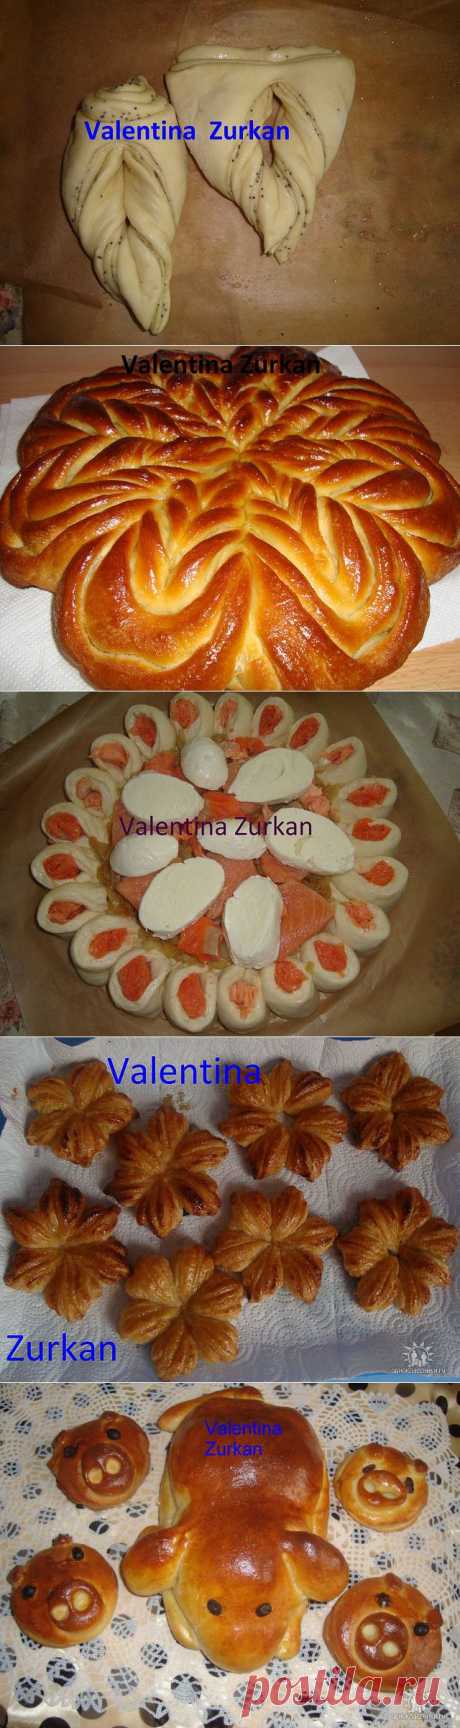 Техника оформления пирогов от Valentina Zurkan